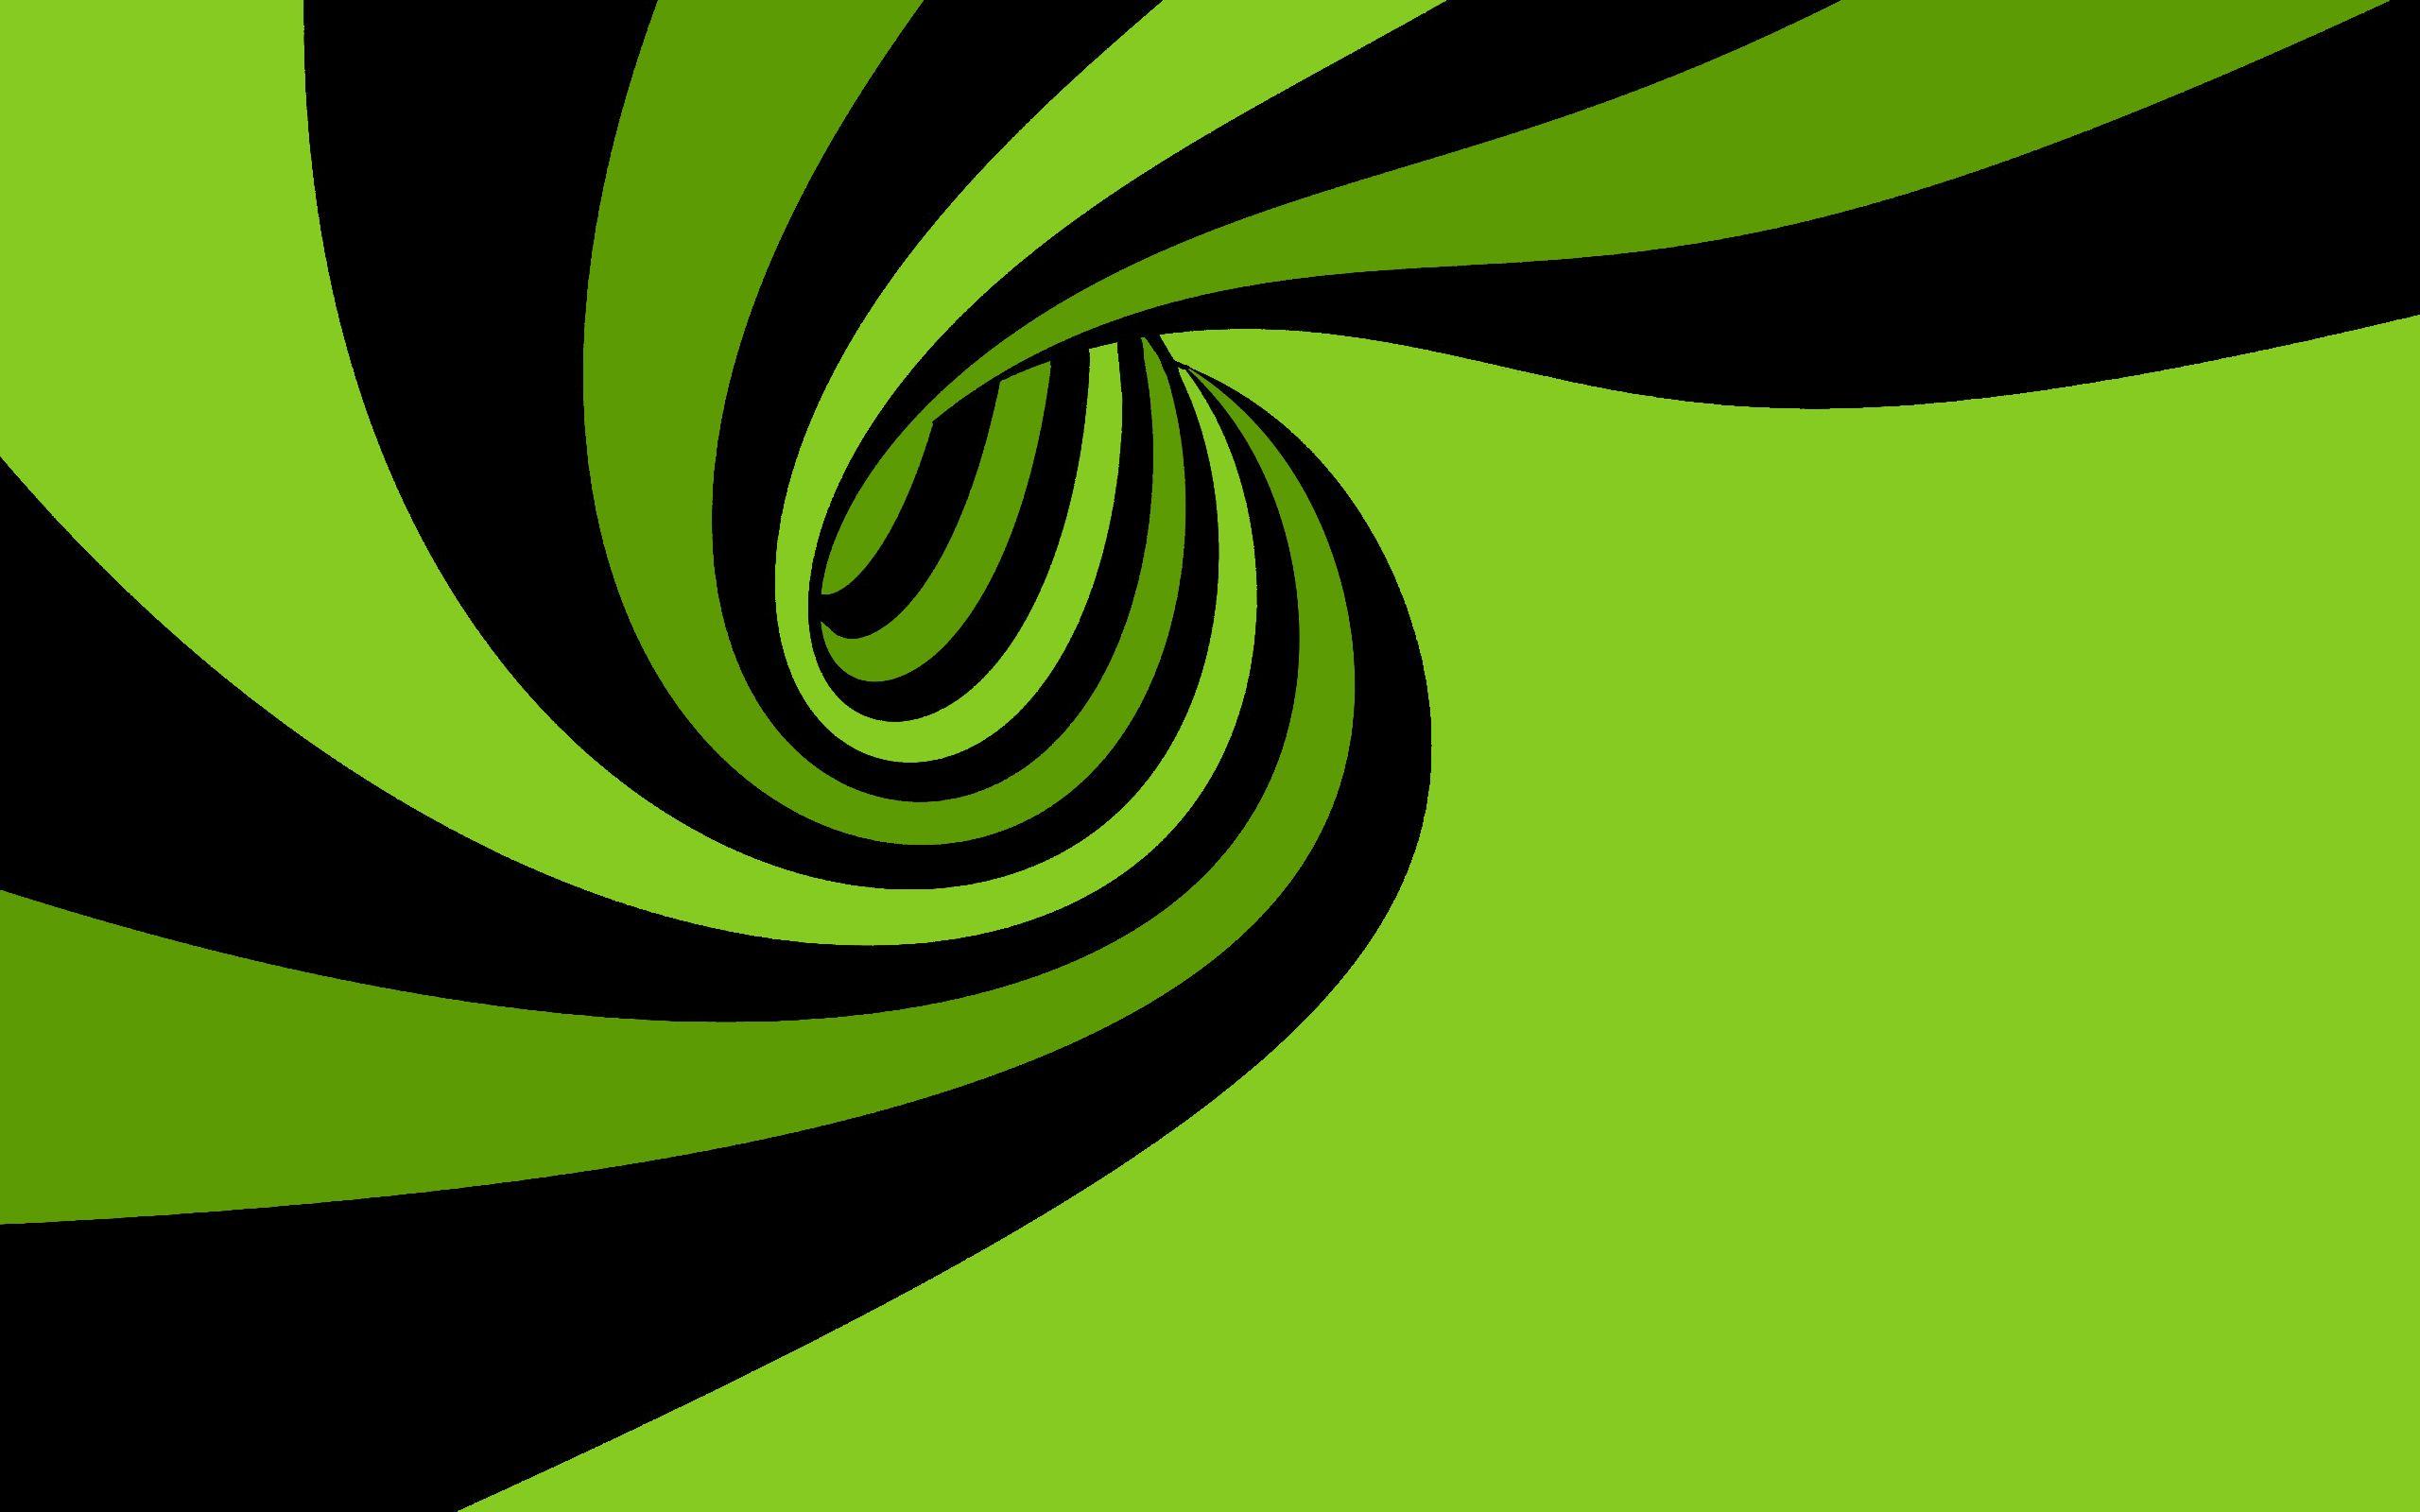 Download the Green Warp Pipe Wallpaper, Green Warp Pipe iPhone